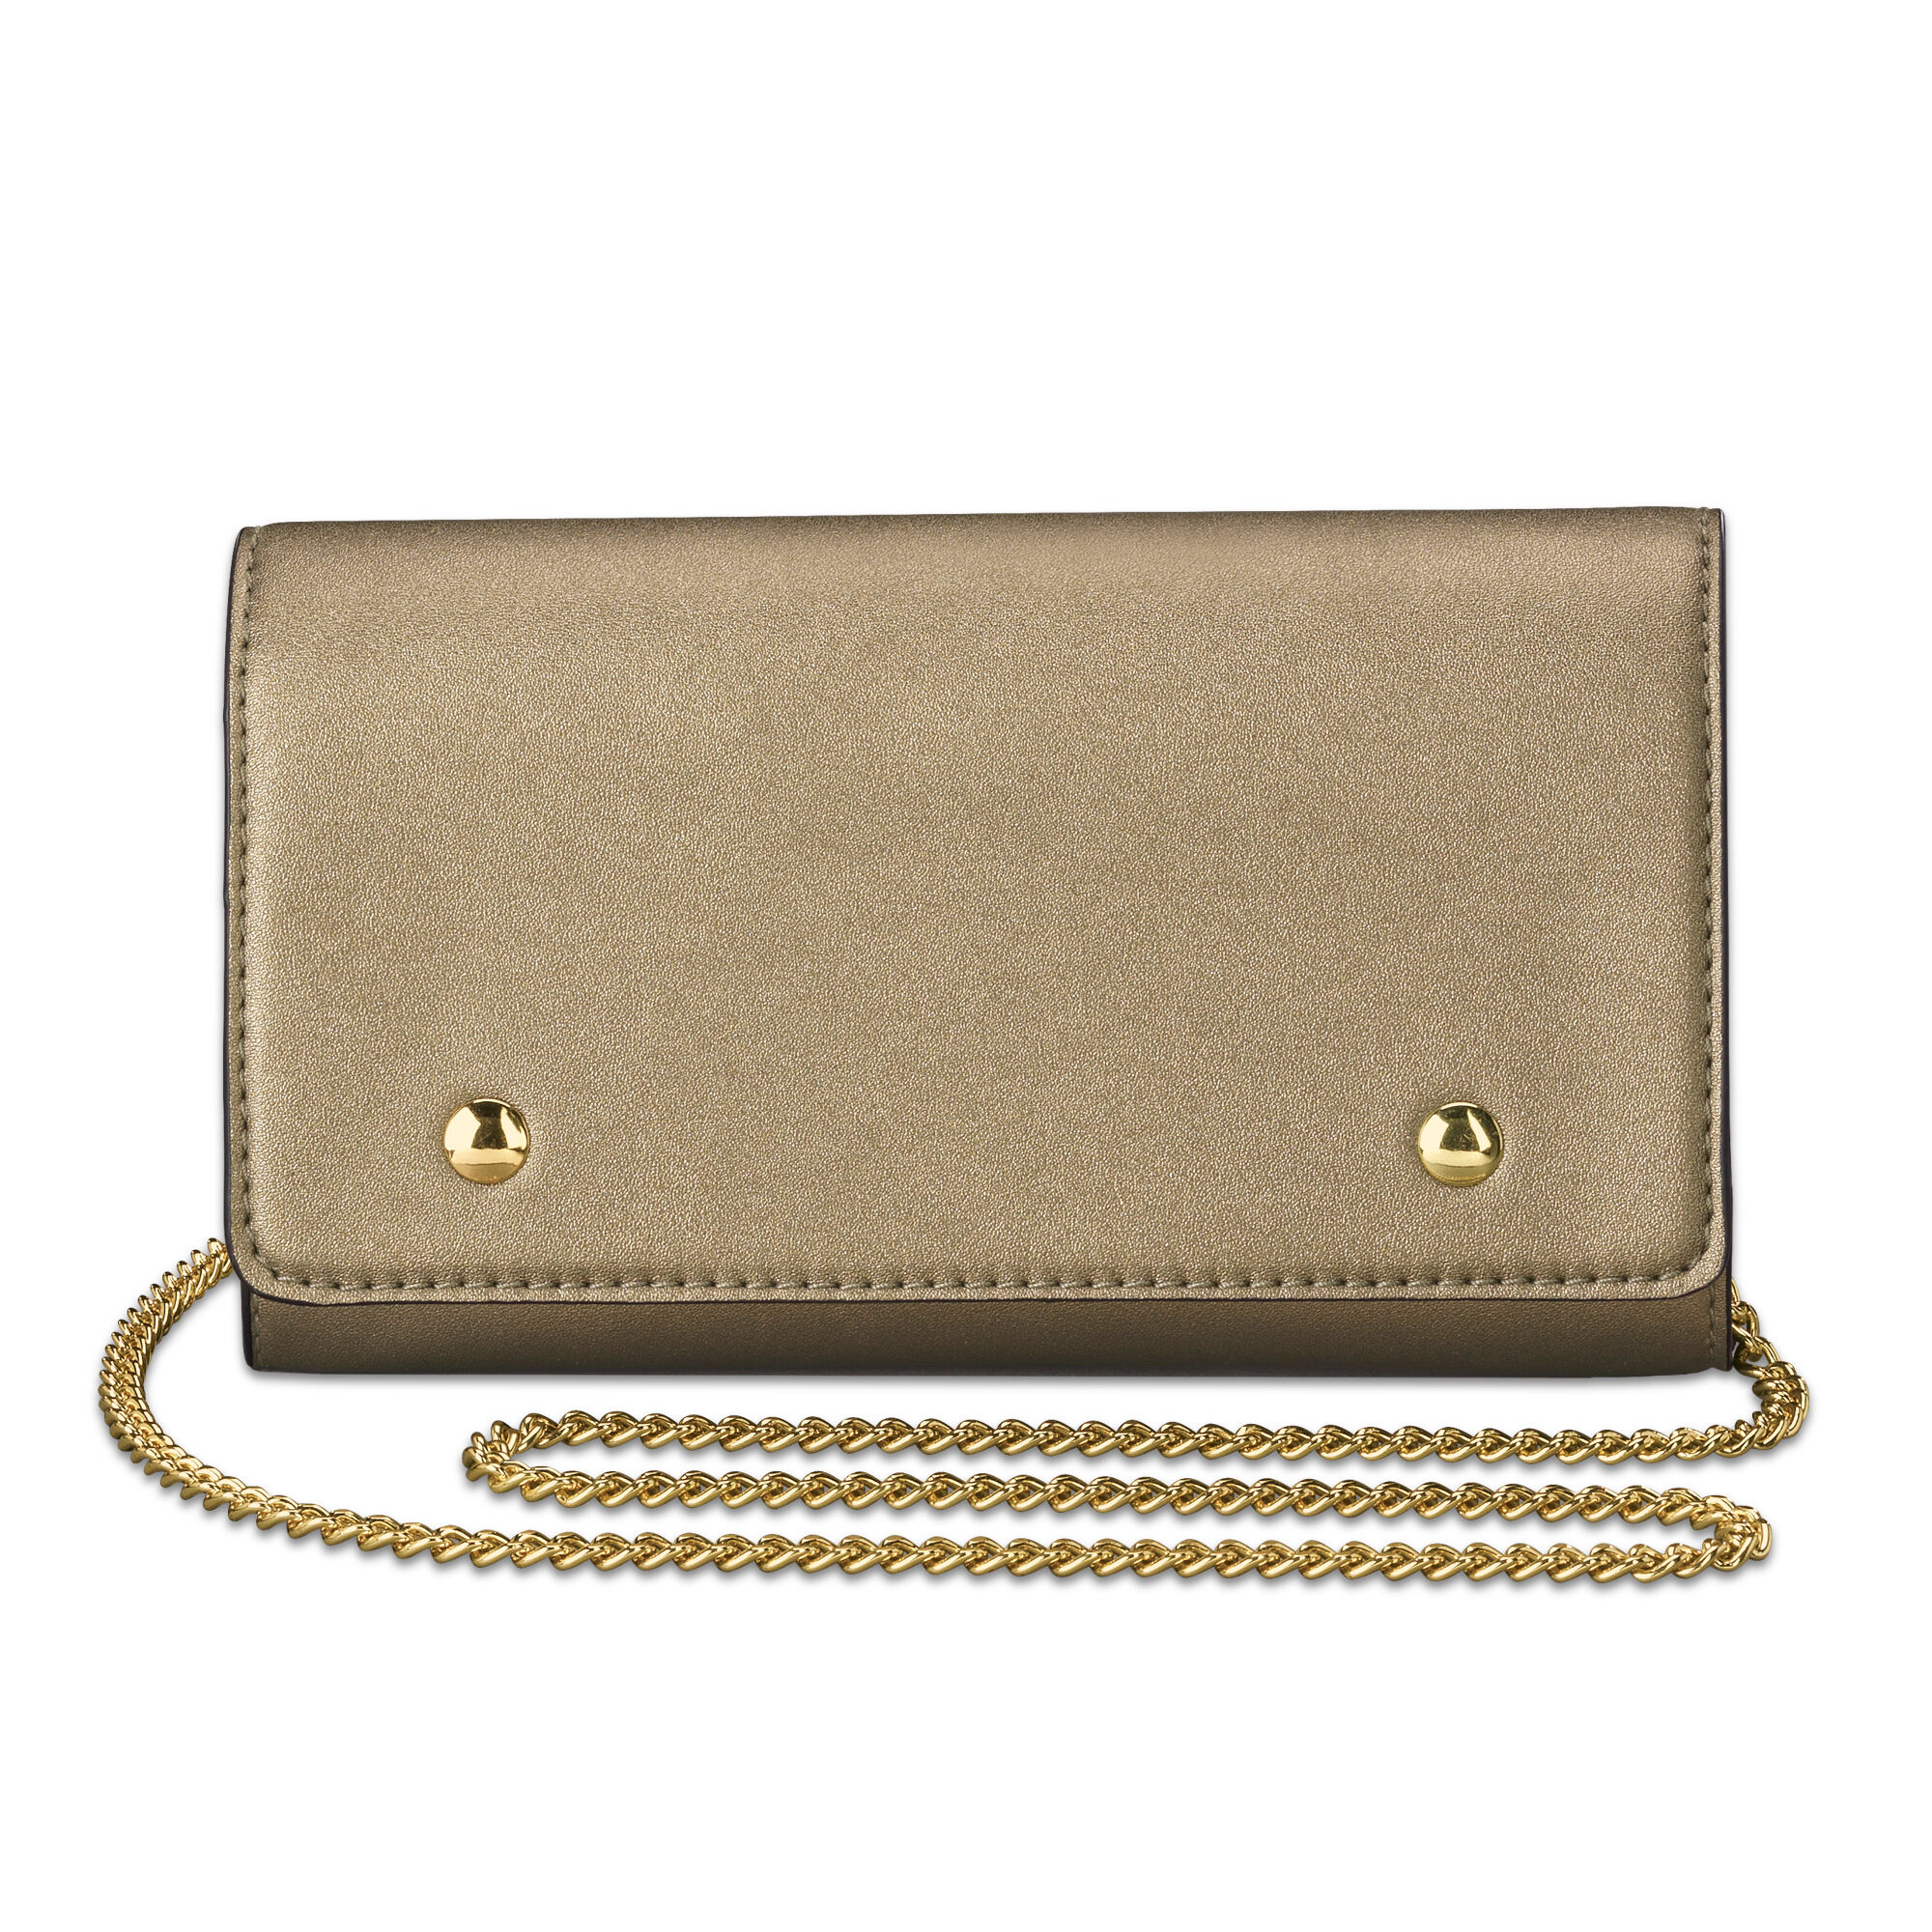 The Sloane Metallic Handbag Set 5519 0011 c wallet